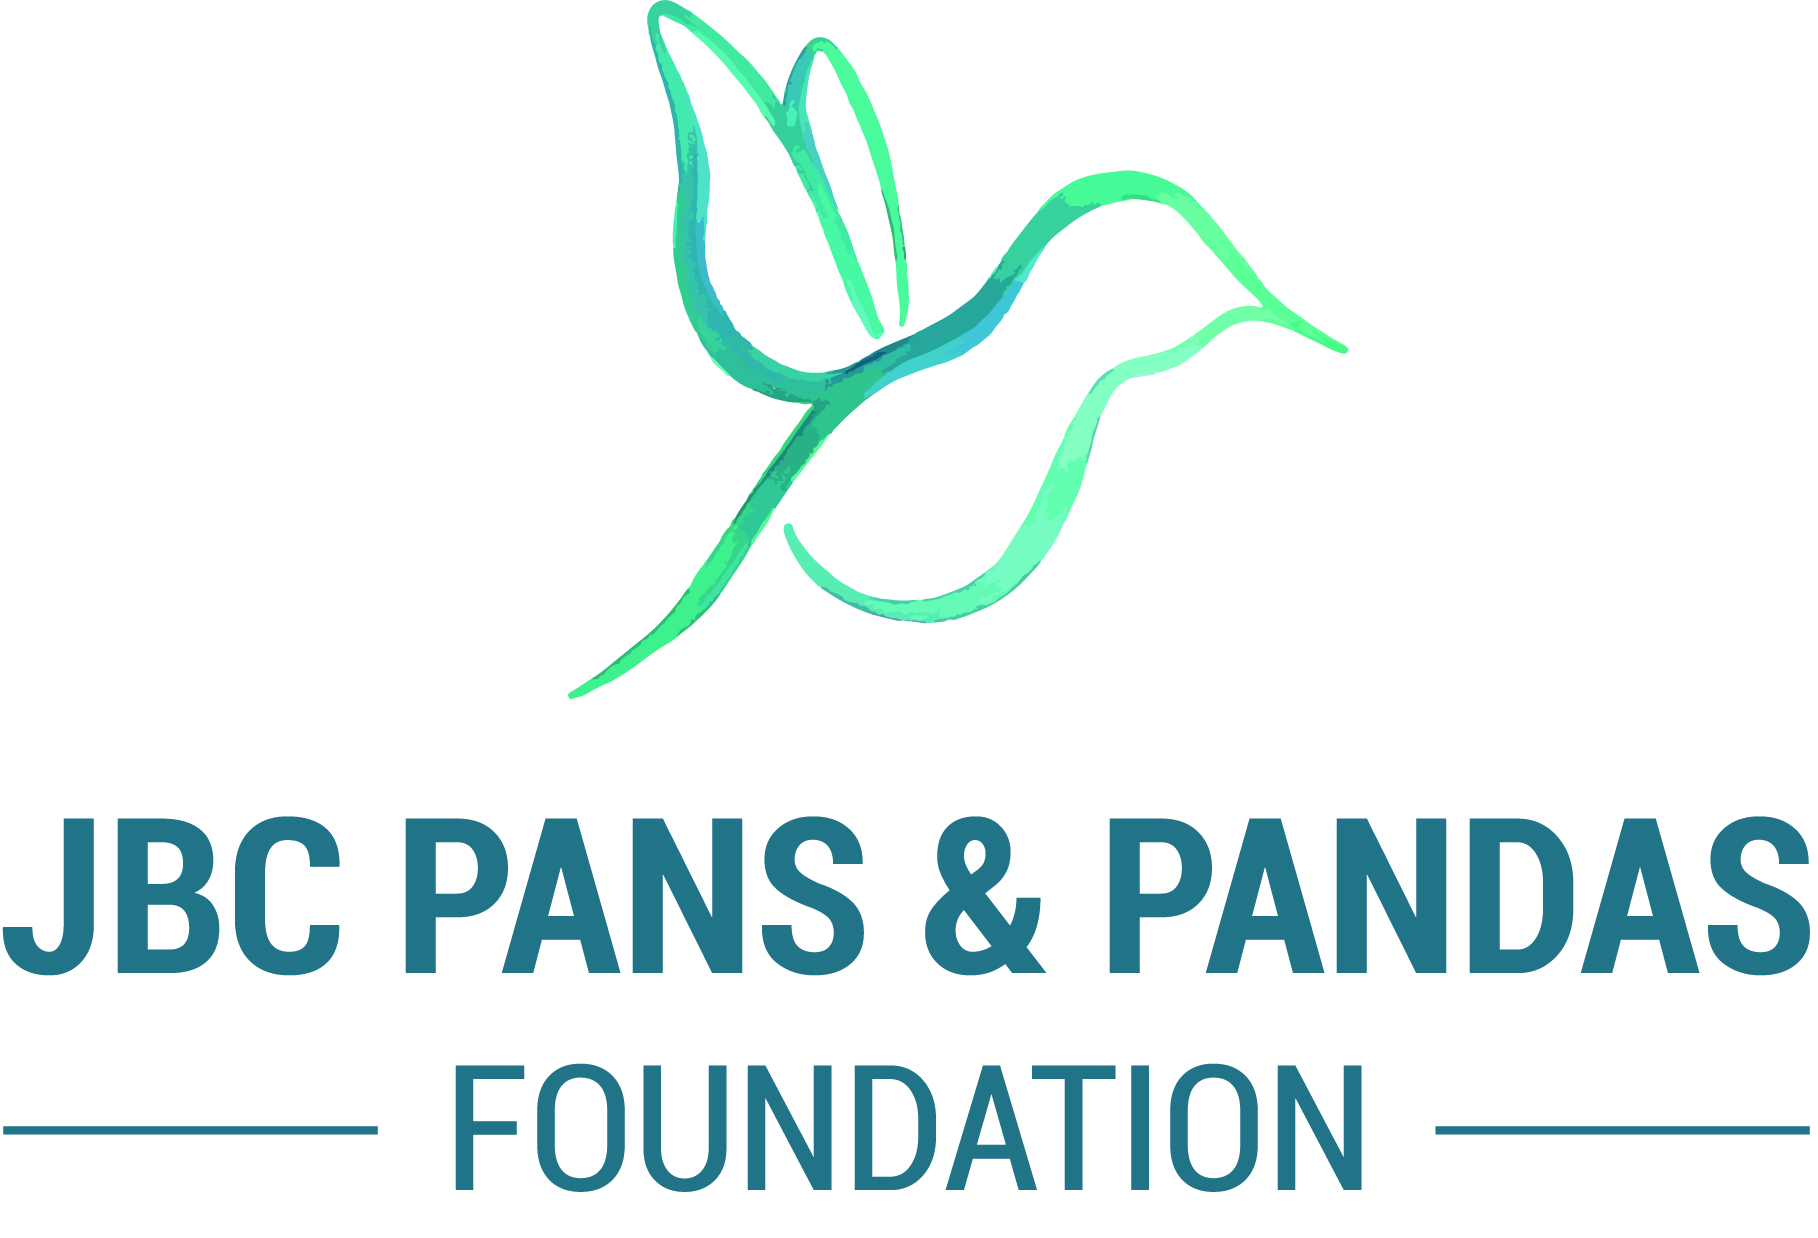 The JBC PANS & PANDAS Foundation logo